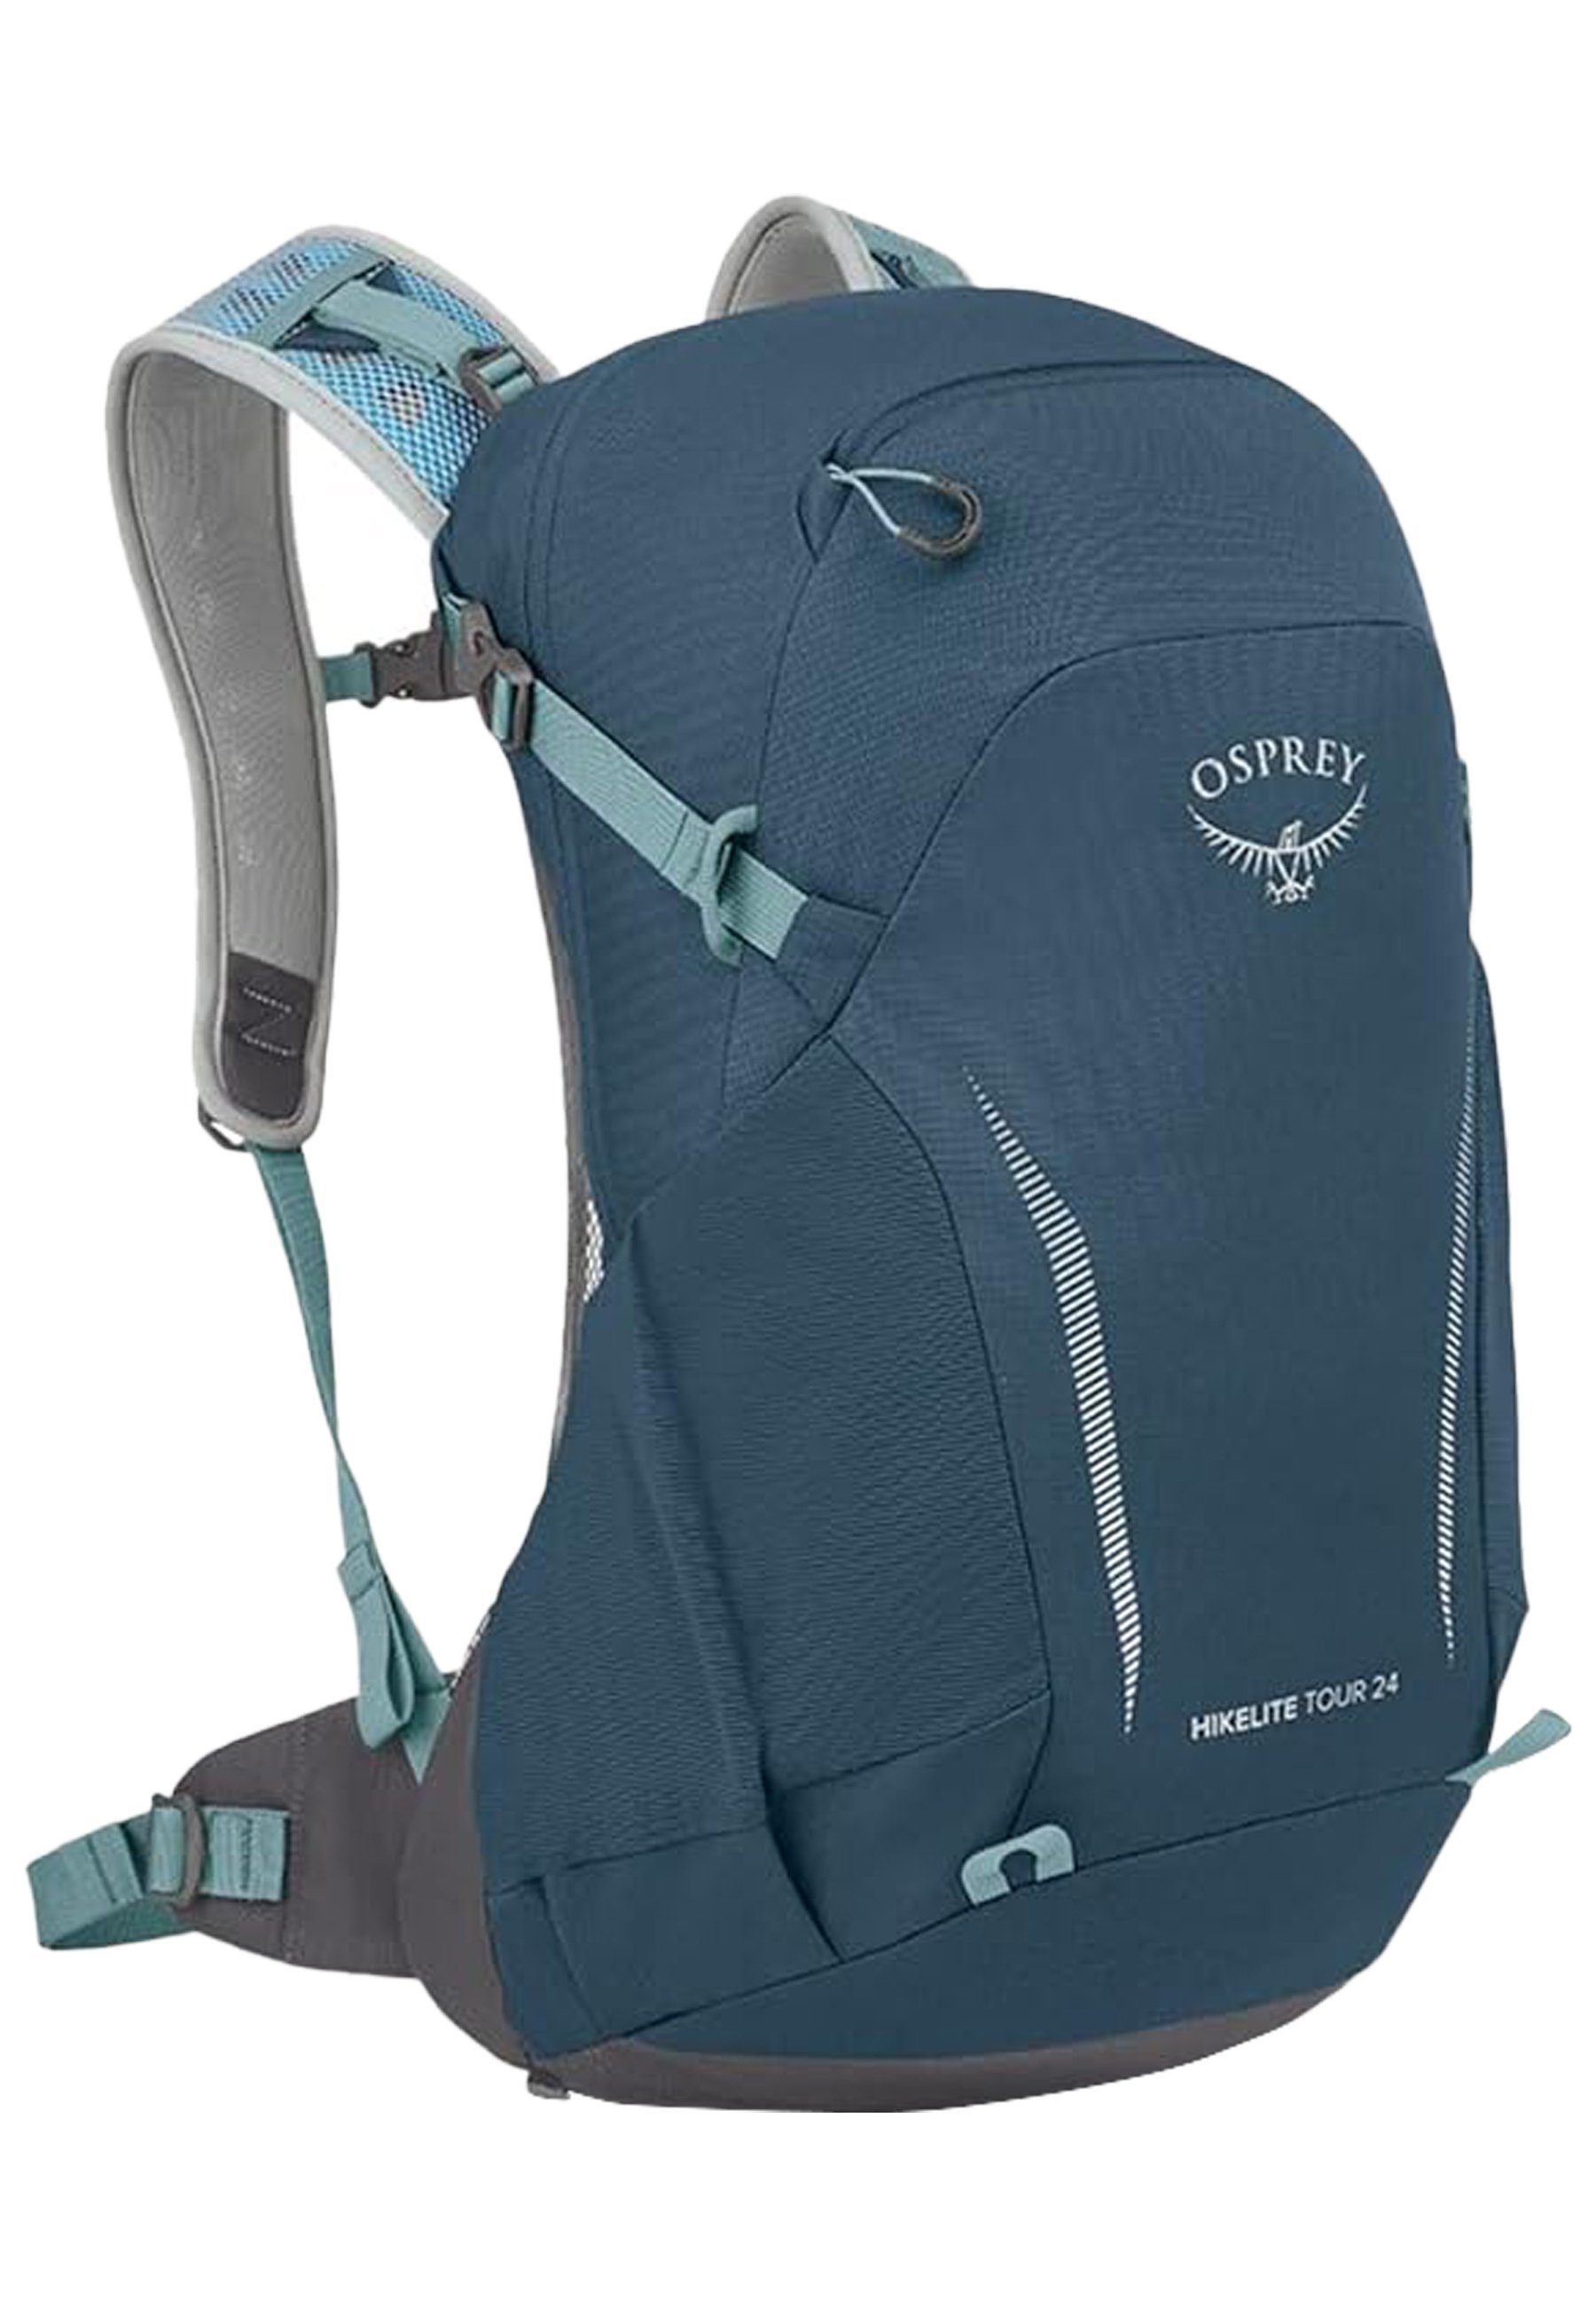 Osprey Trekkingrucksack blau Hikelite